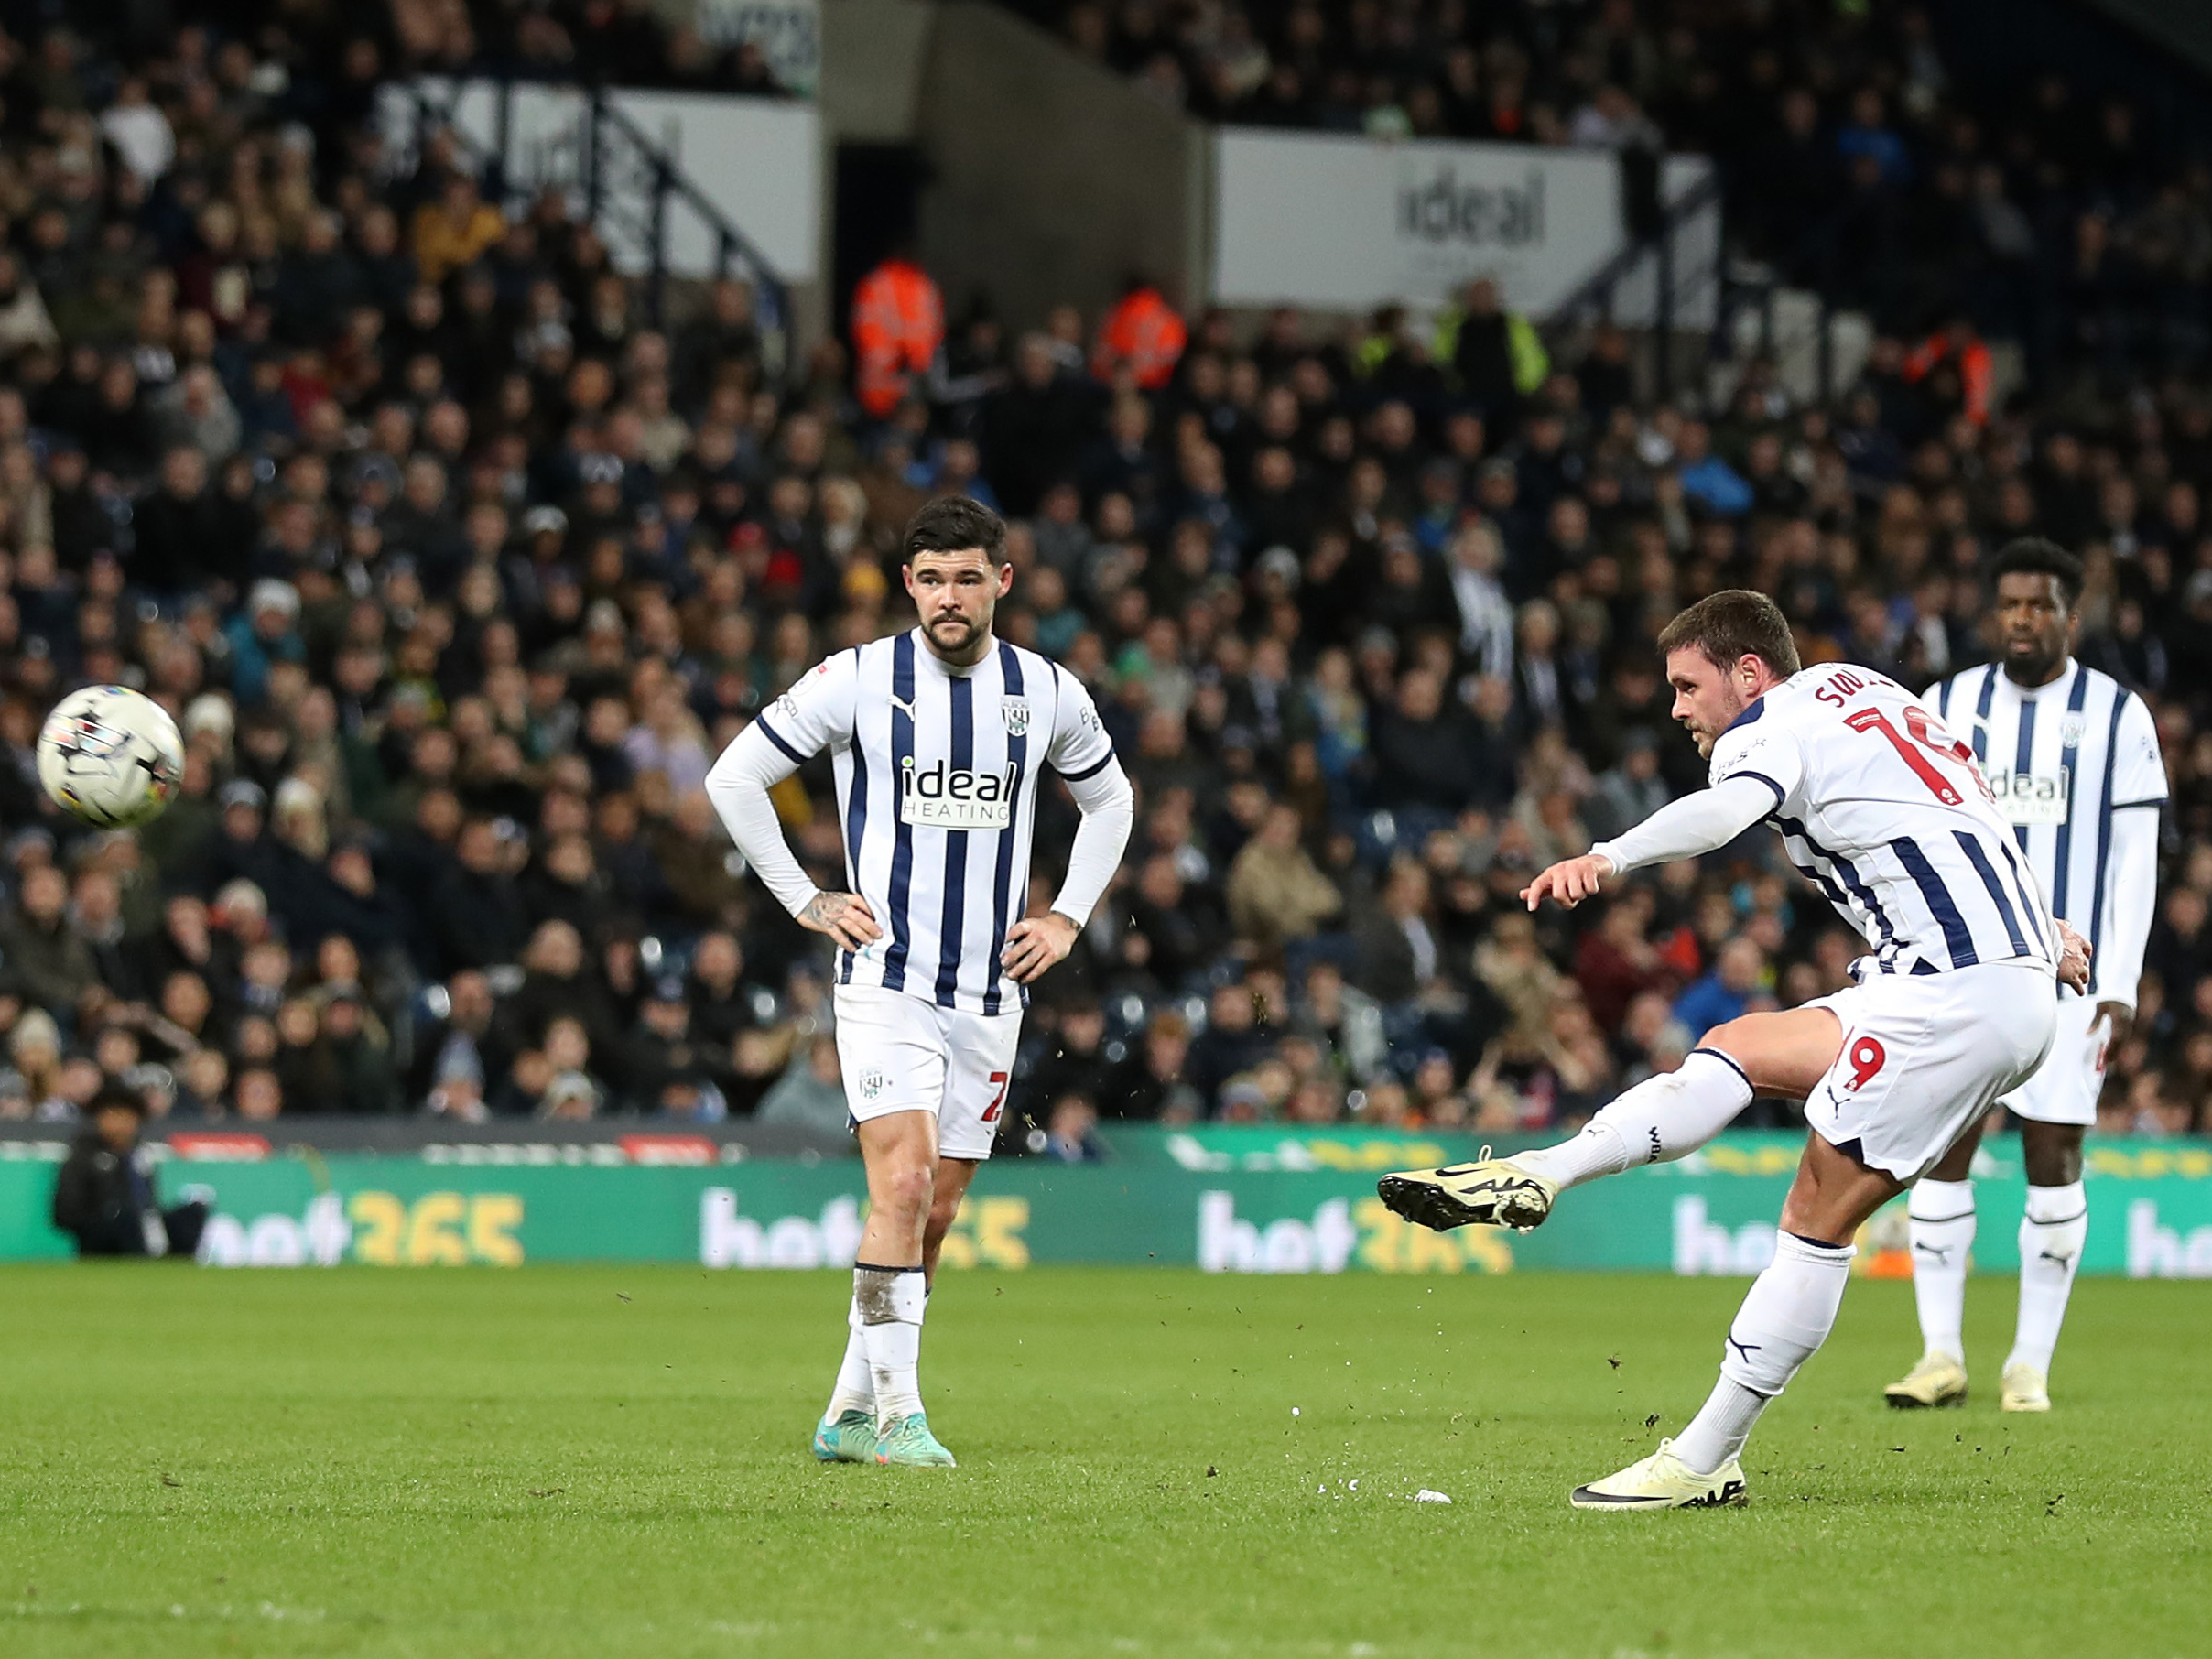 An image of John Swift hitting a free kick against Southampton